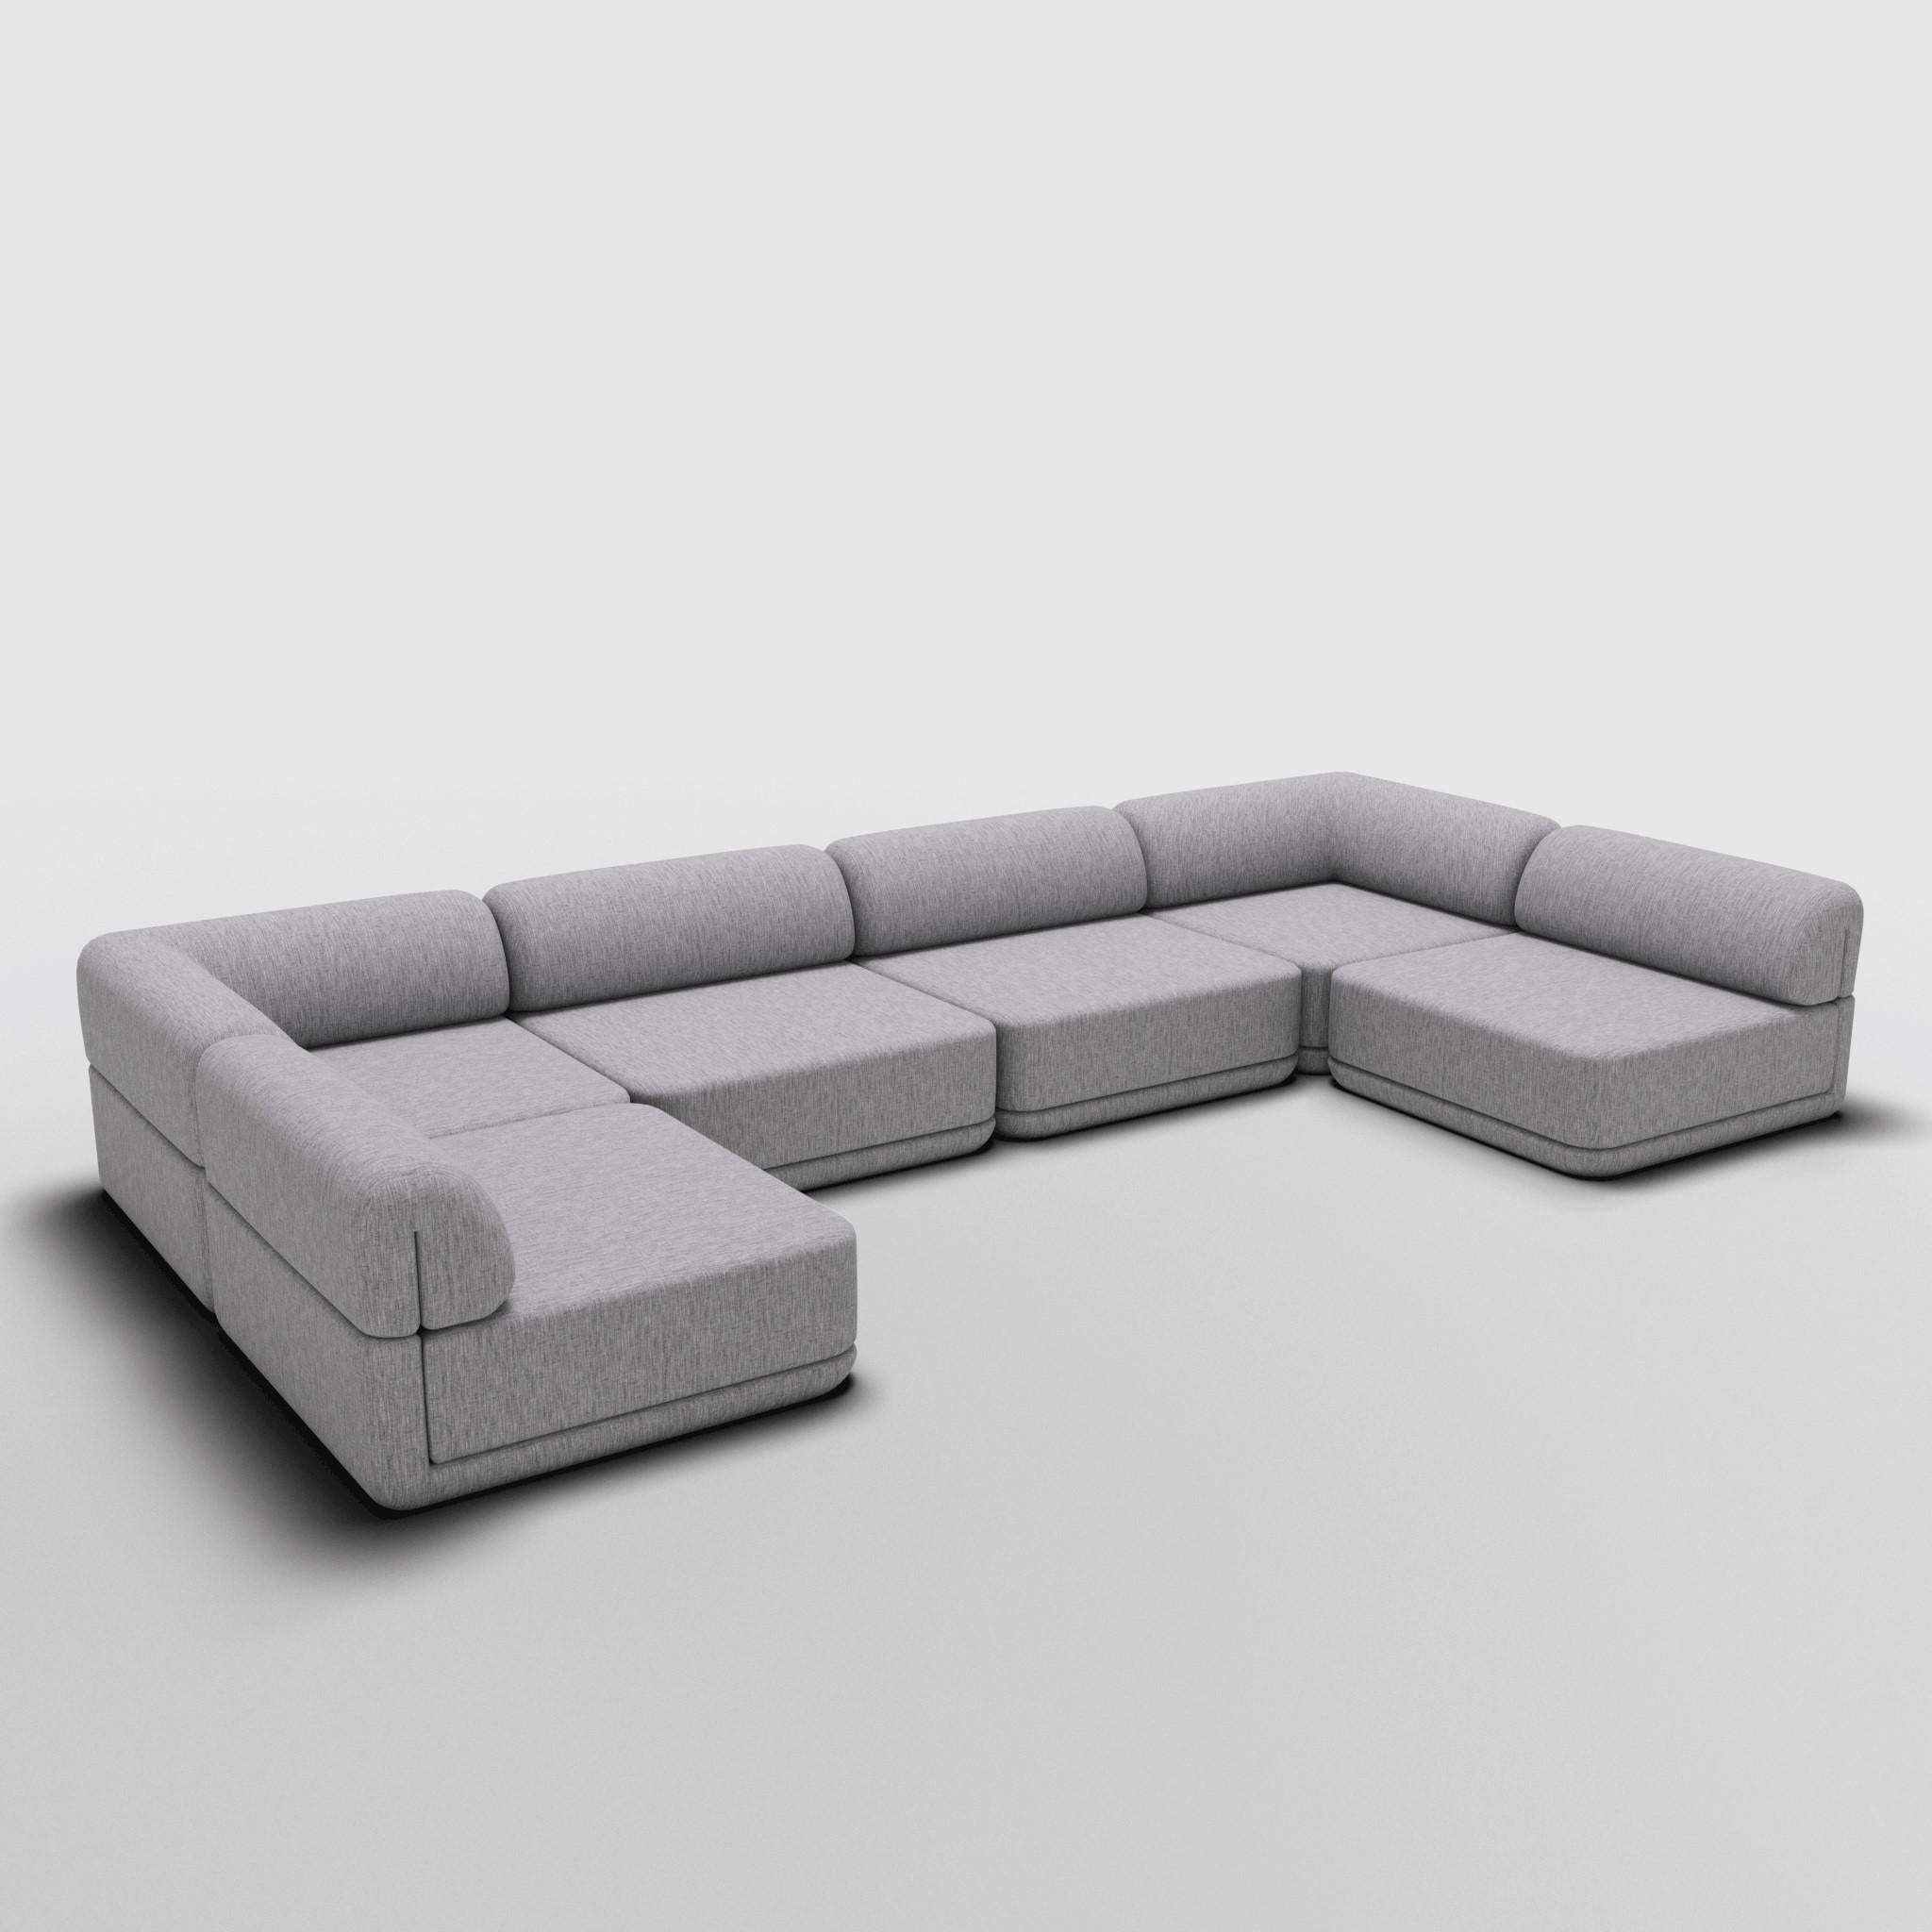 The Cube Sofa - U-förmige Sitzgruppe im Angebot 1